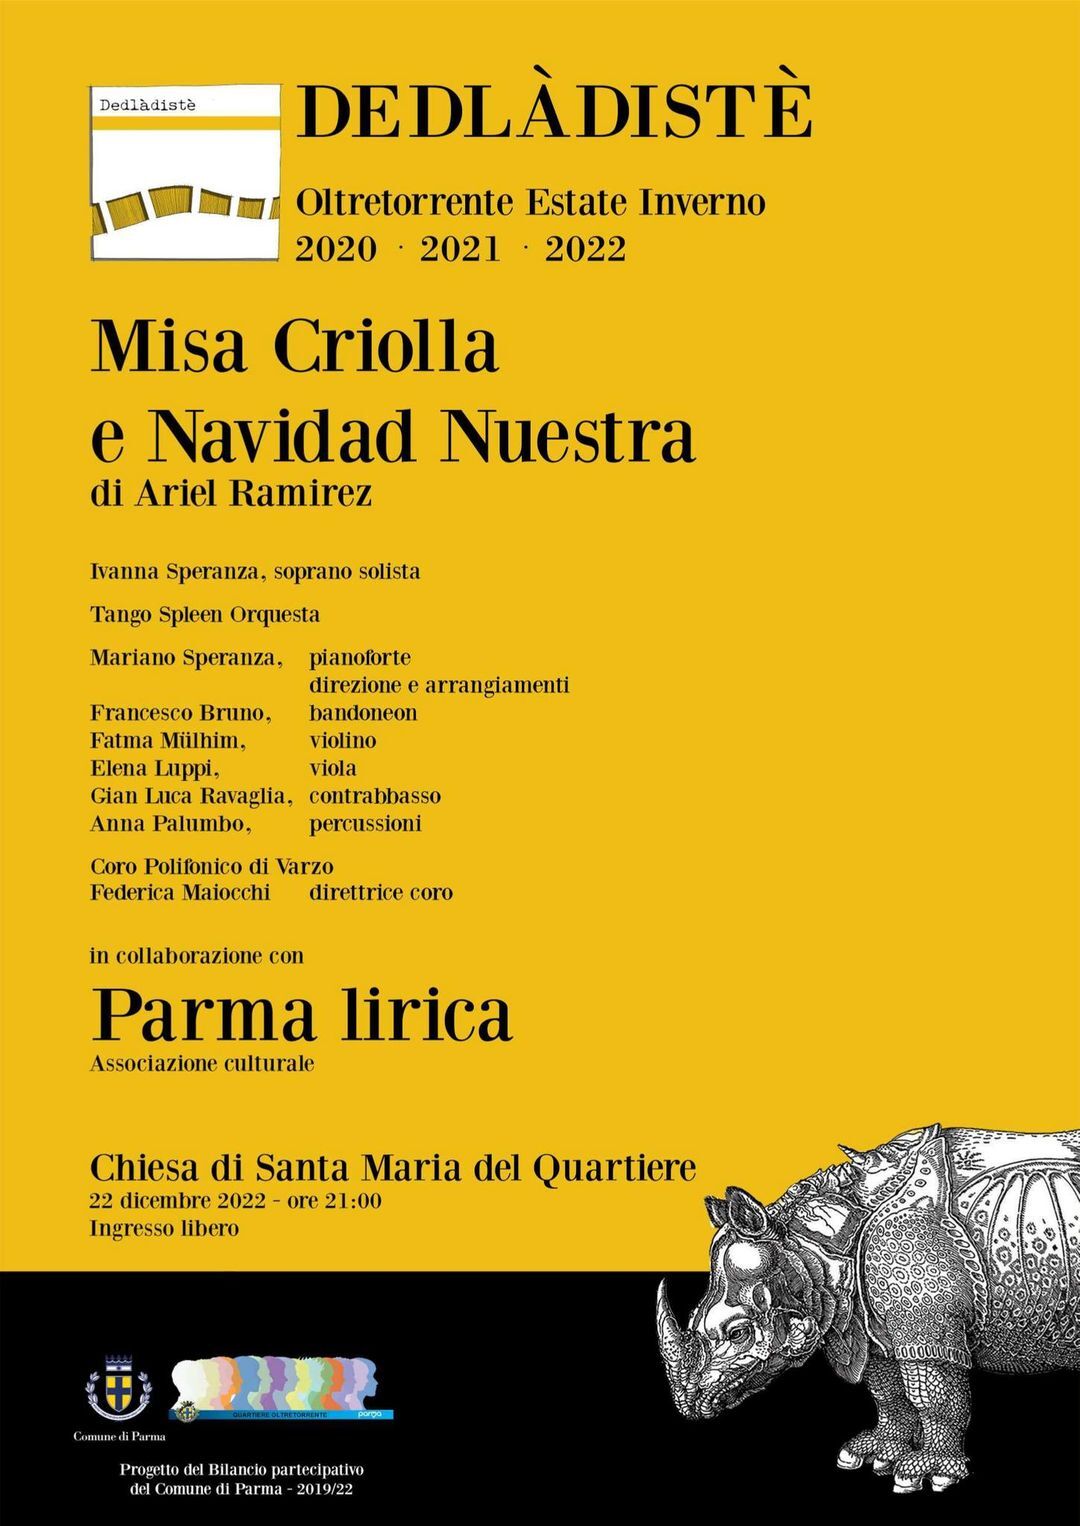 DEDLADISTE' - Concerto: Misa Criolla e Navidad Nuestra  concerto nella Chiesa di Santa Maria del Quartiere